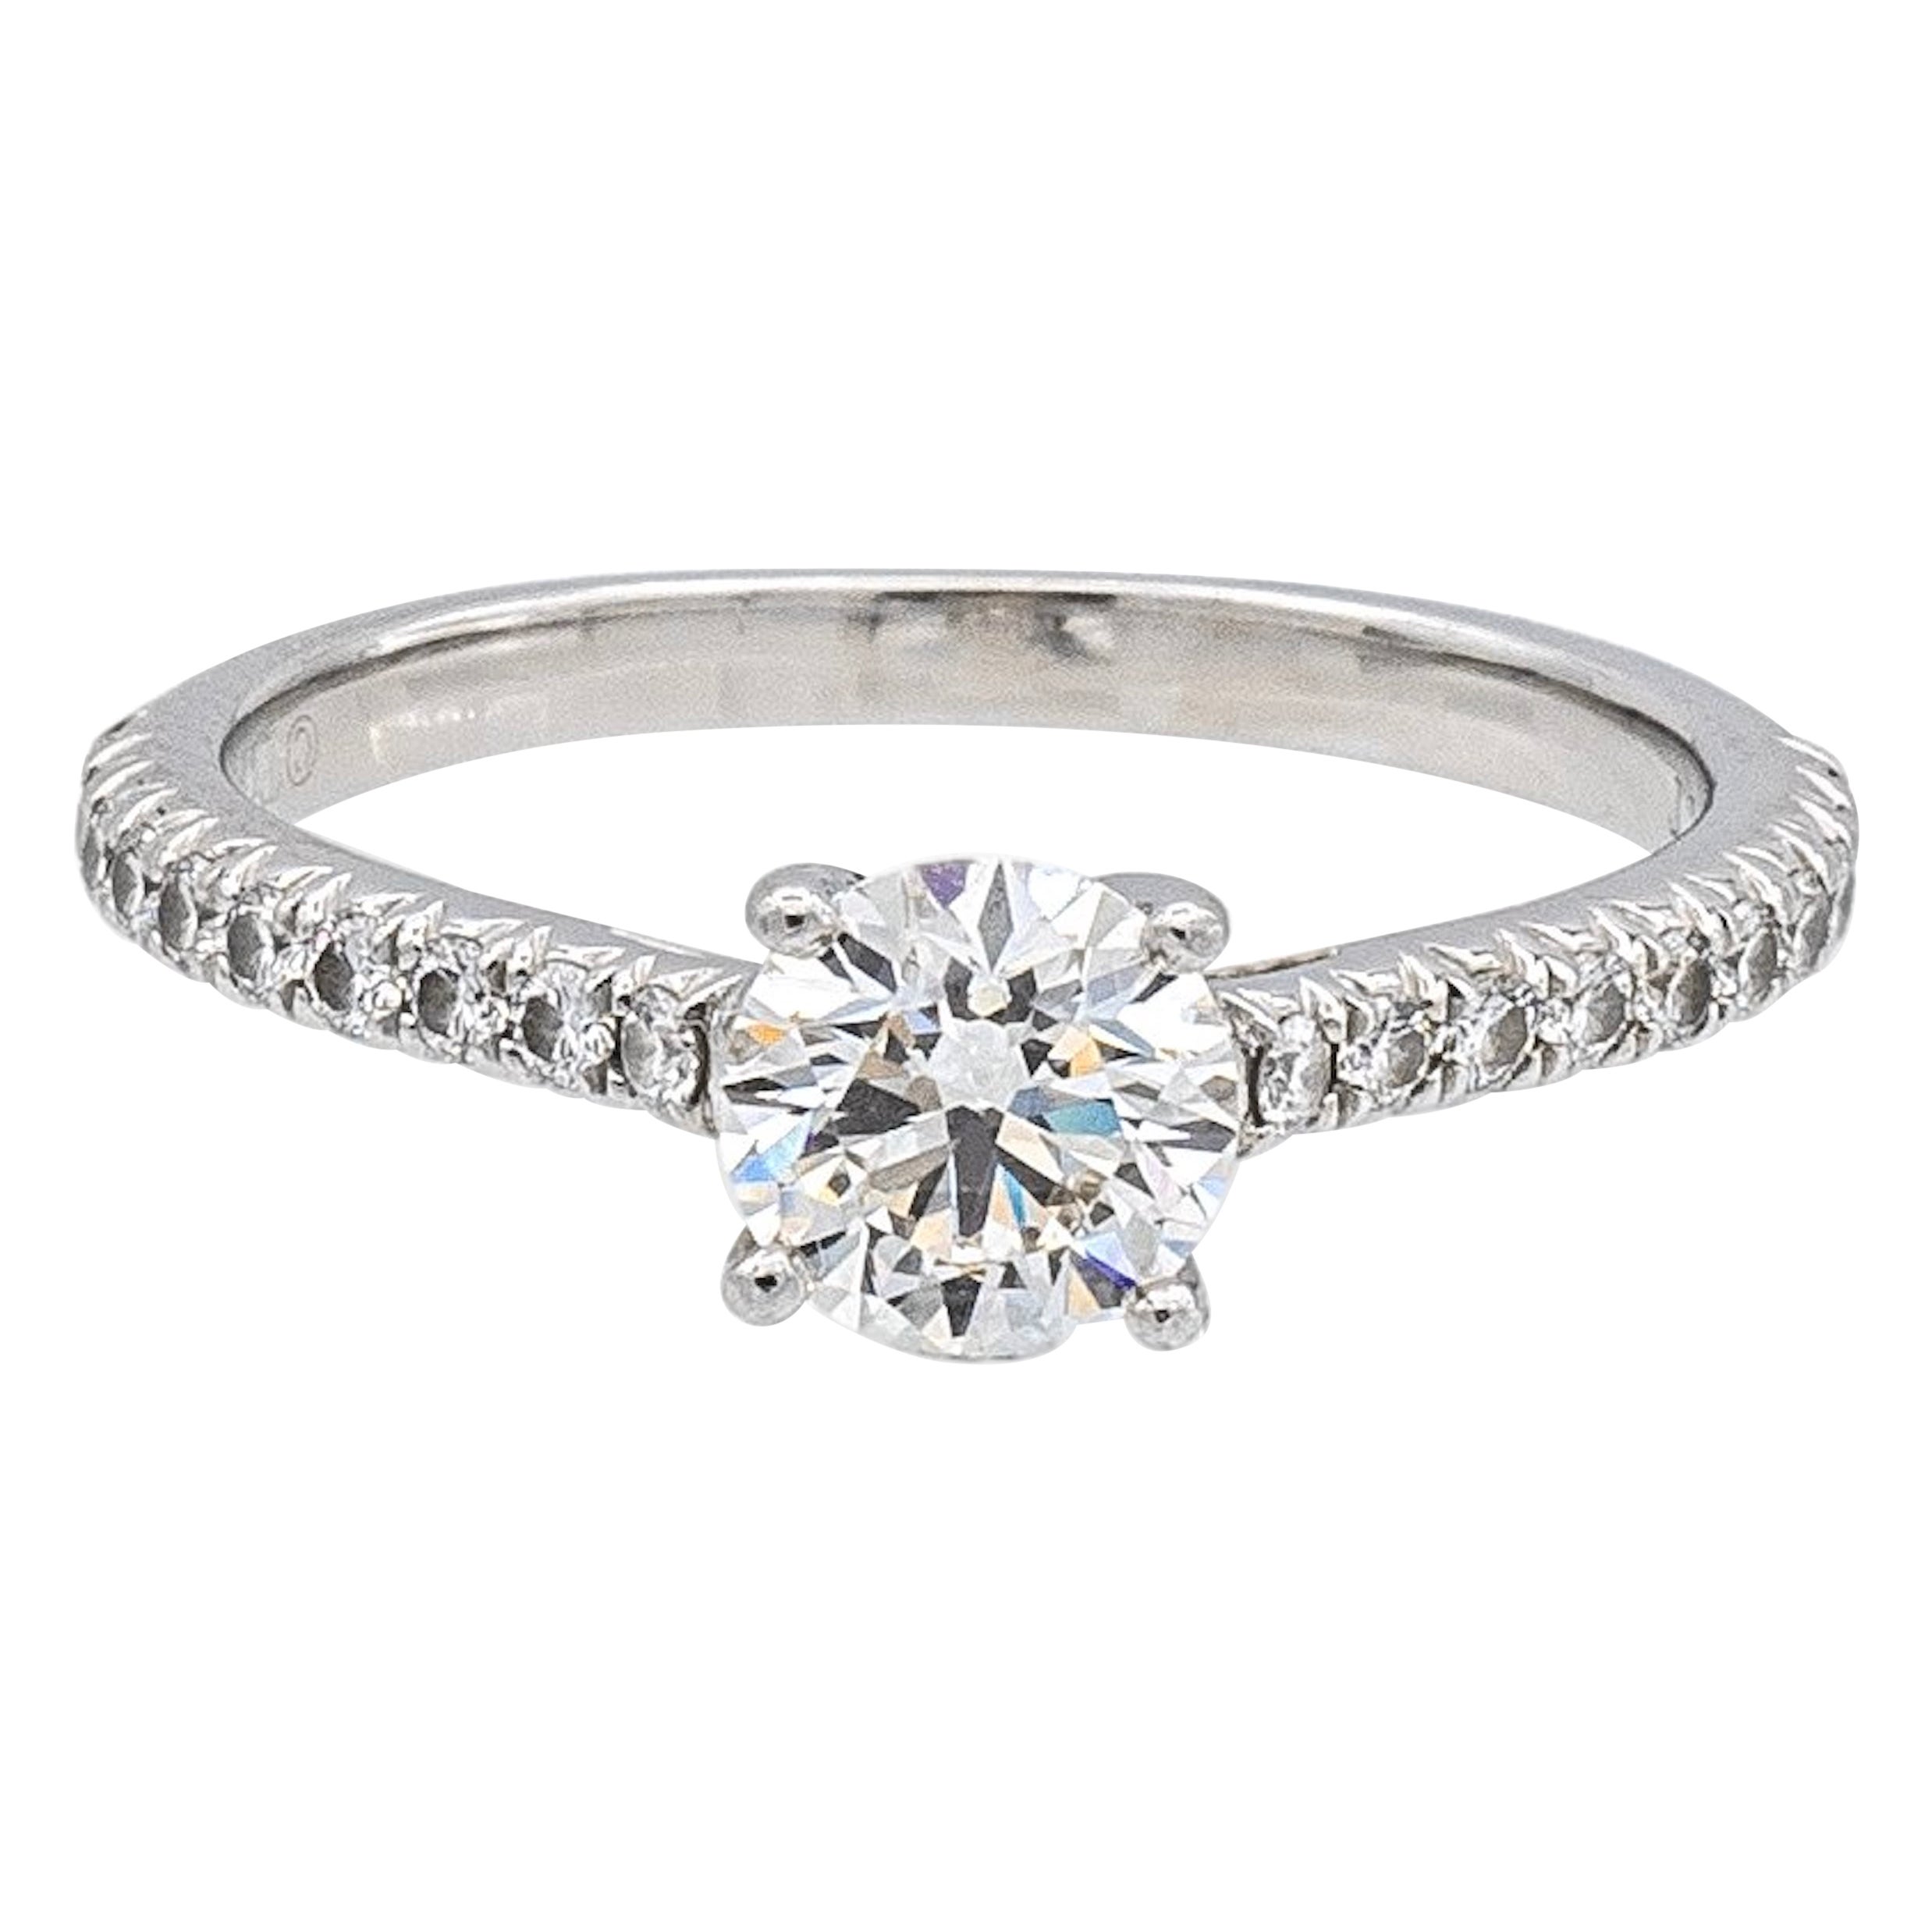 Tiffany & Co. Platinum Novo Round Diamond Engagement Ring .75cts Total HVS1